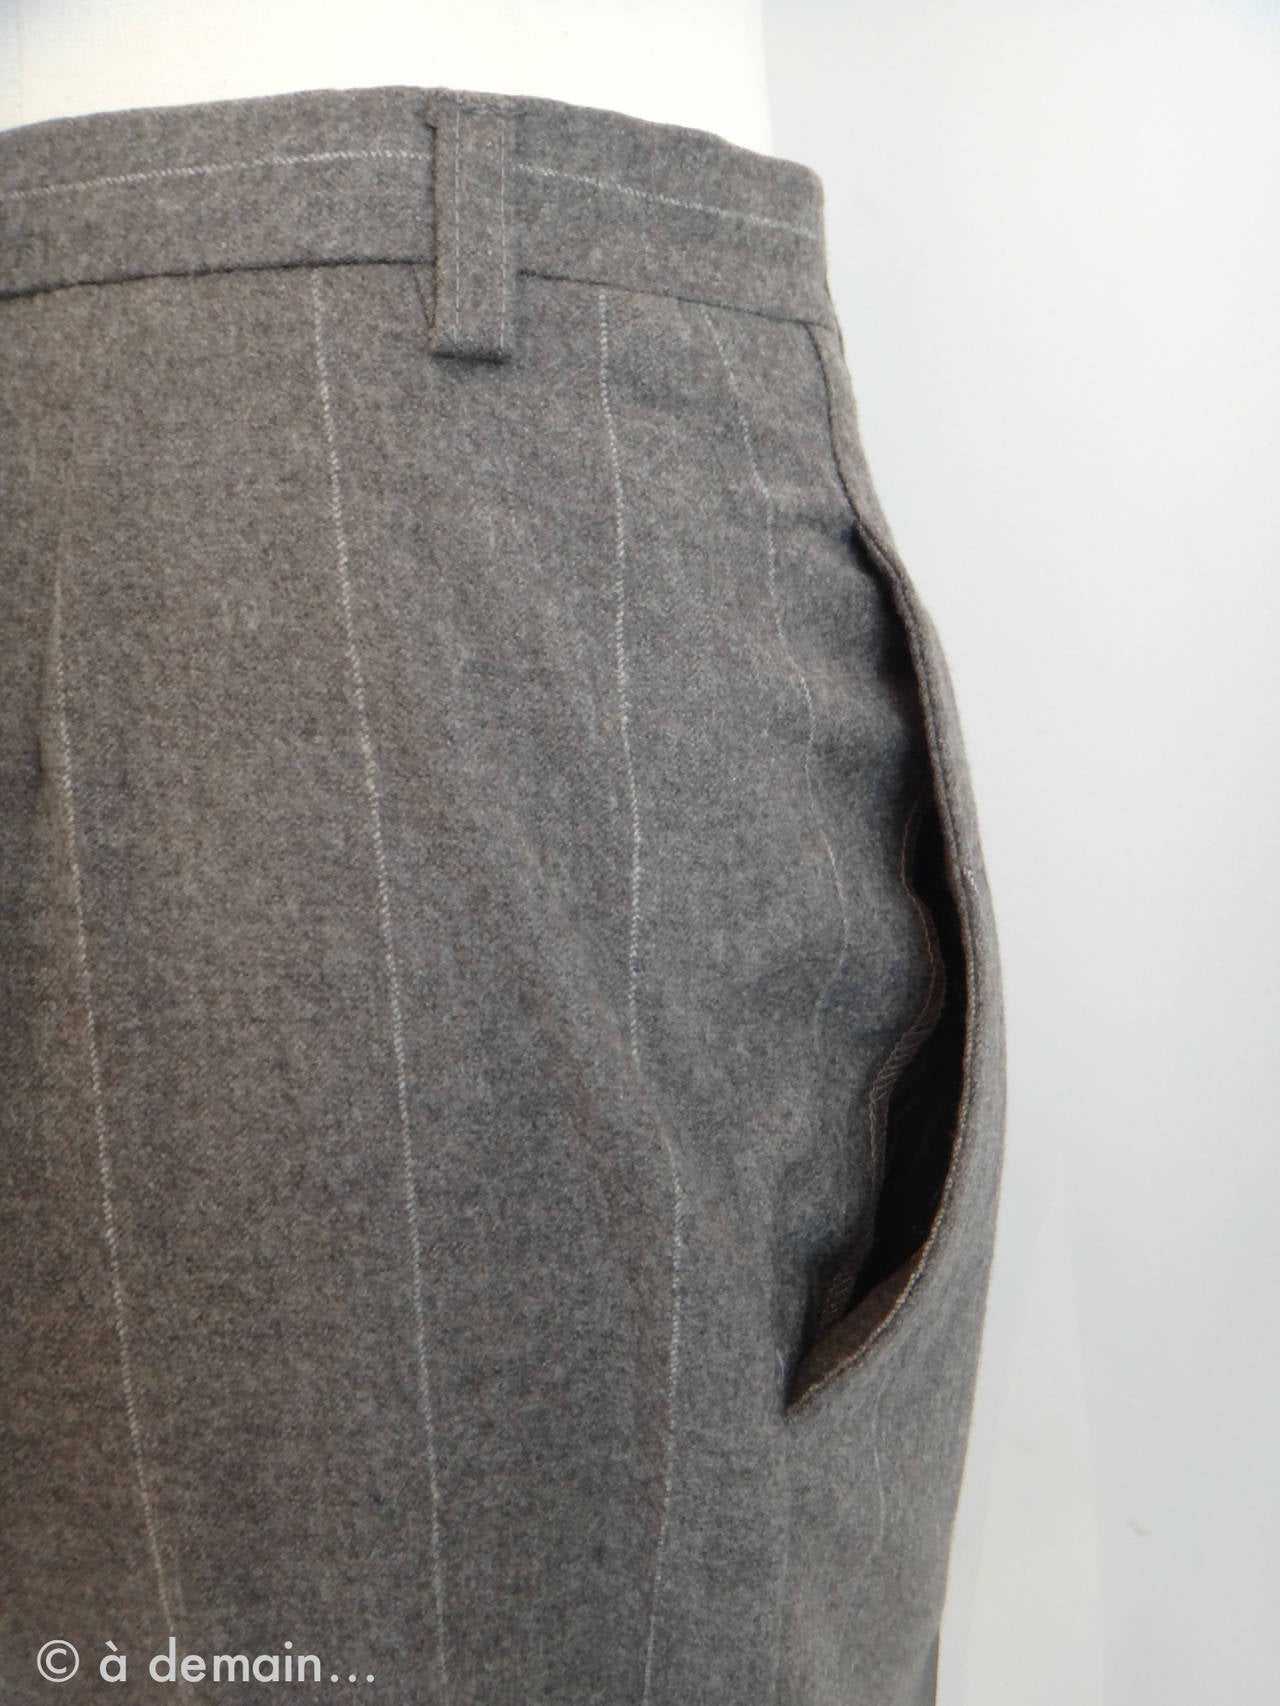 Striped Gray Trouser Suit by Yves Saint Laurent Rive Gauche, size 36 For Sale 3